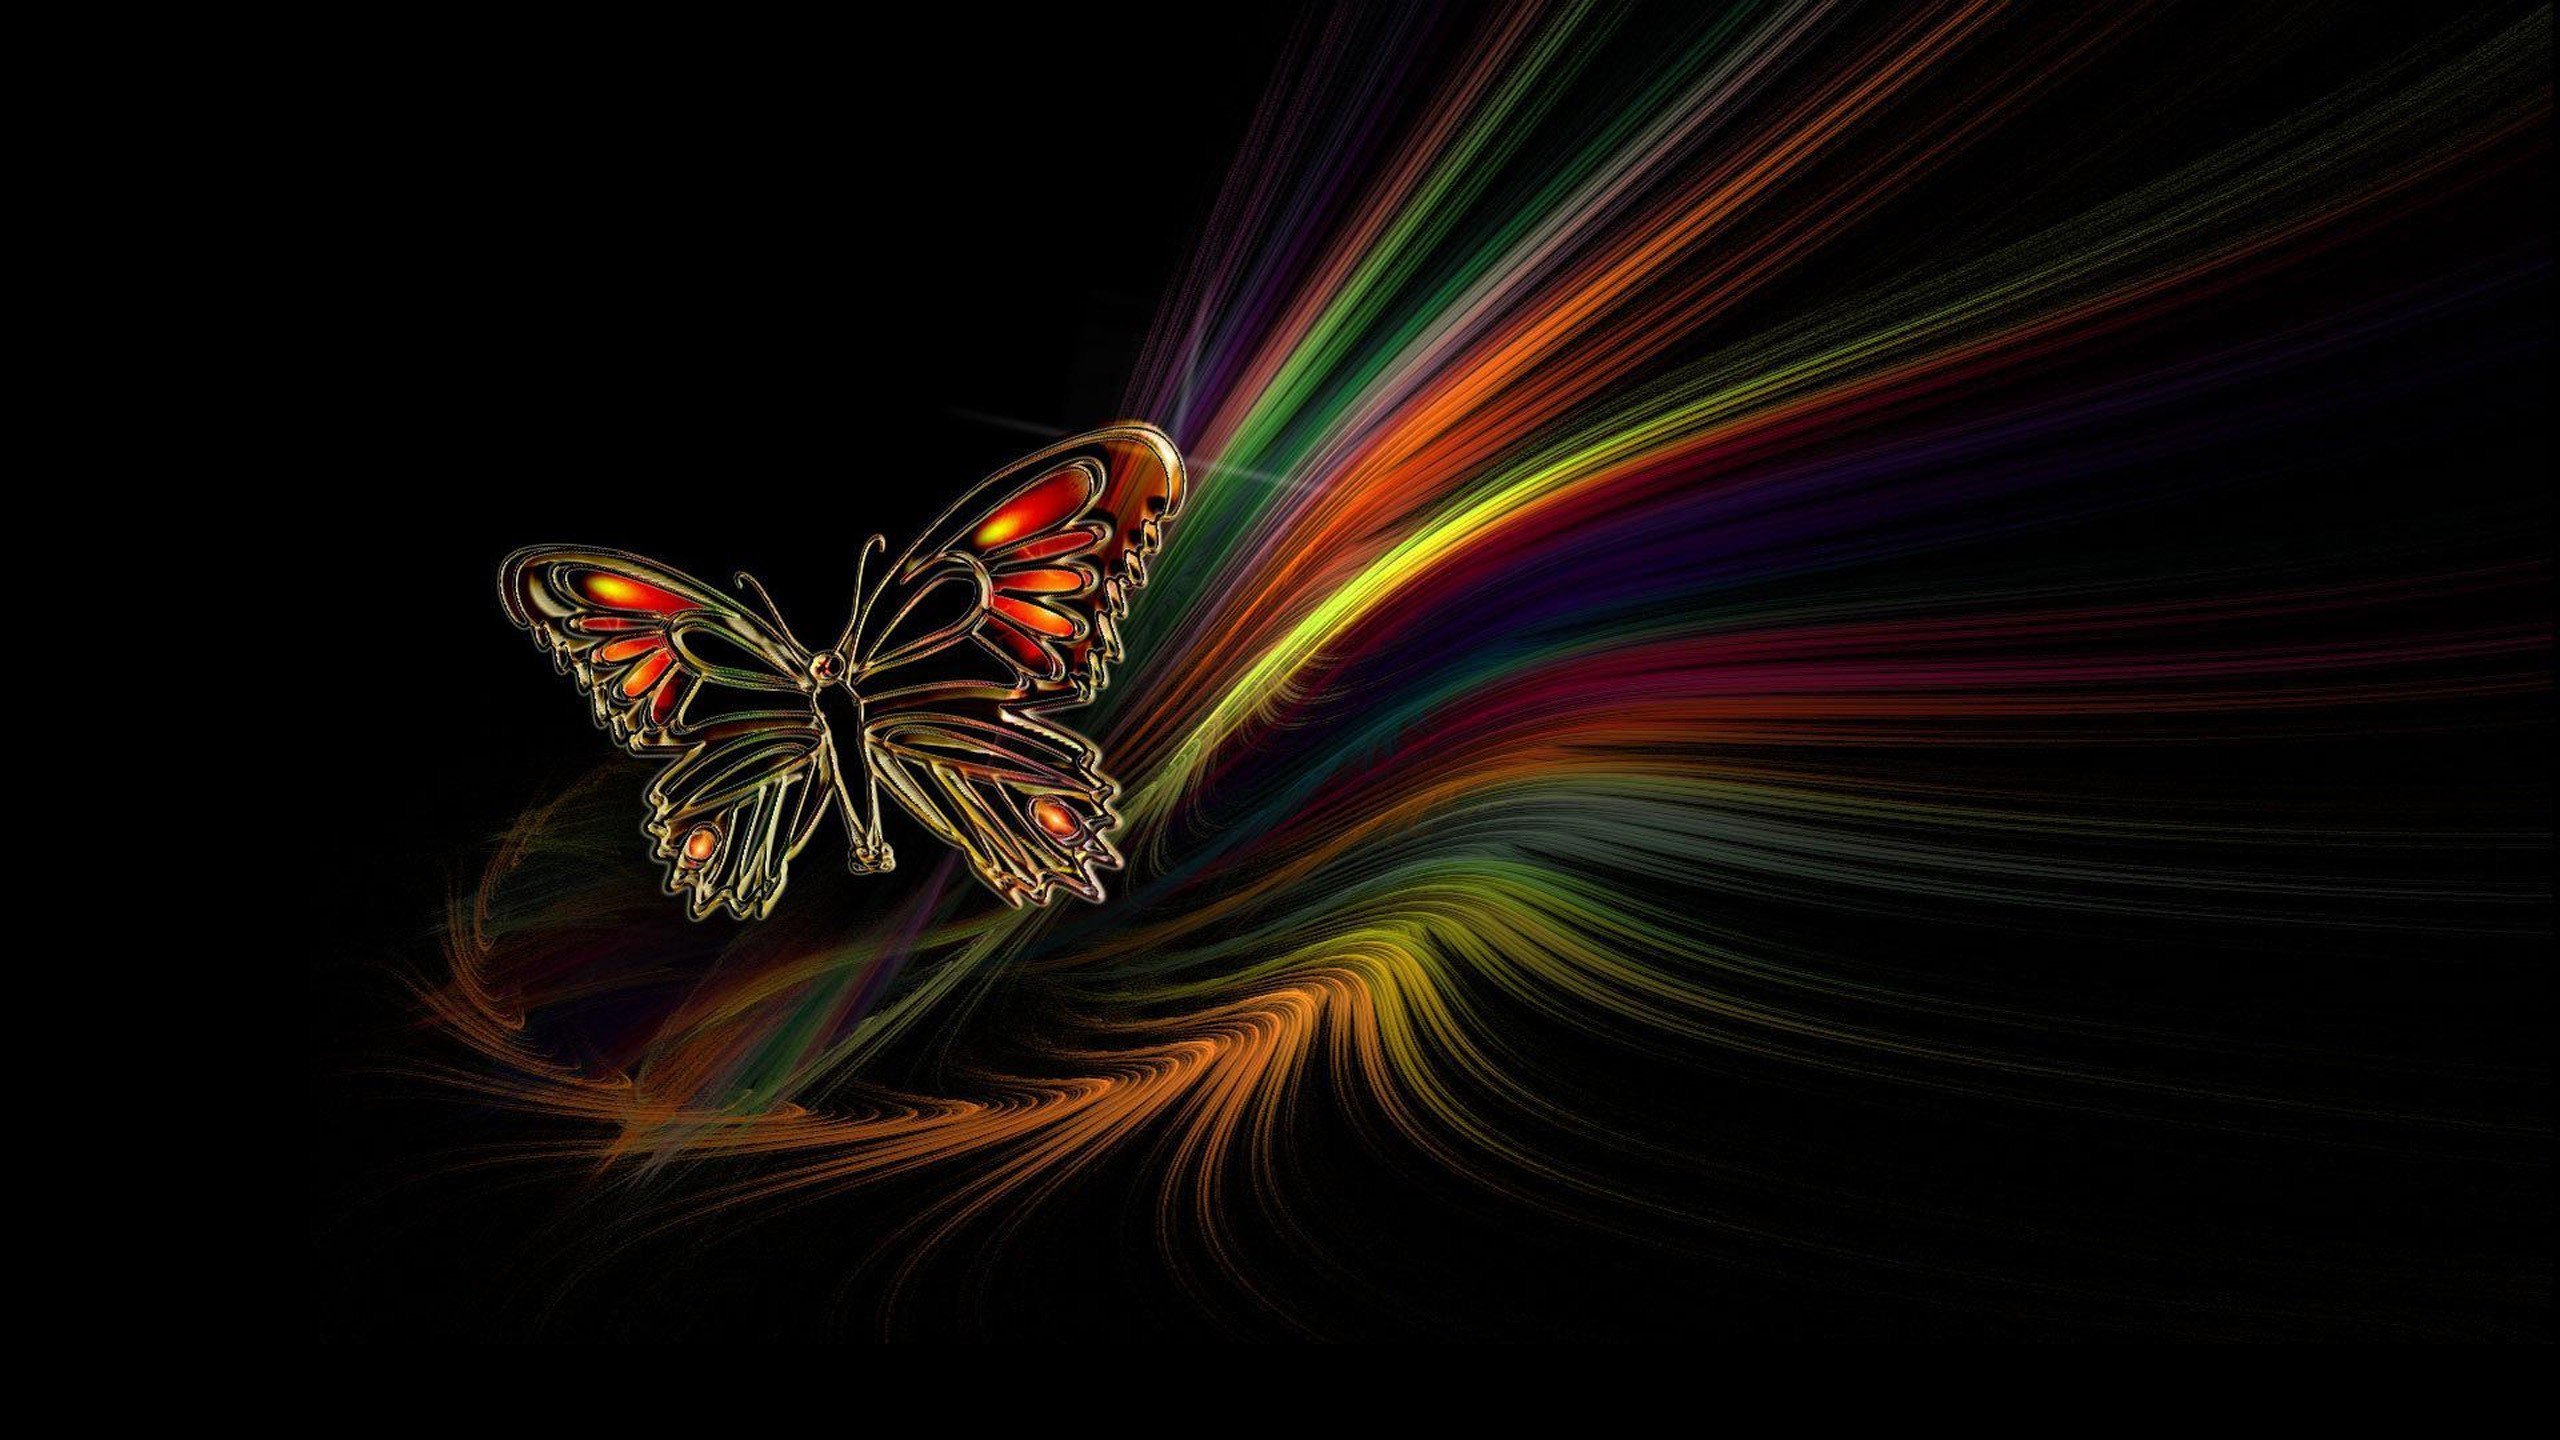 3 на красивом фоне. Бабочка на темном фоне. Бабочка яркая на черном фоне. Яркие бабочки. Радужная бабочка.